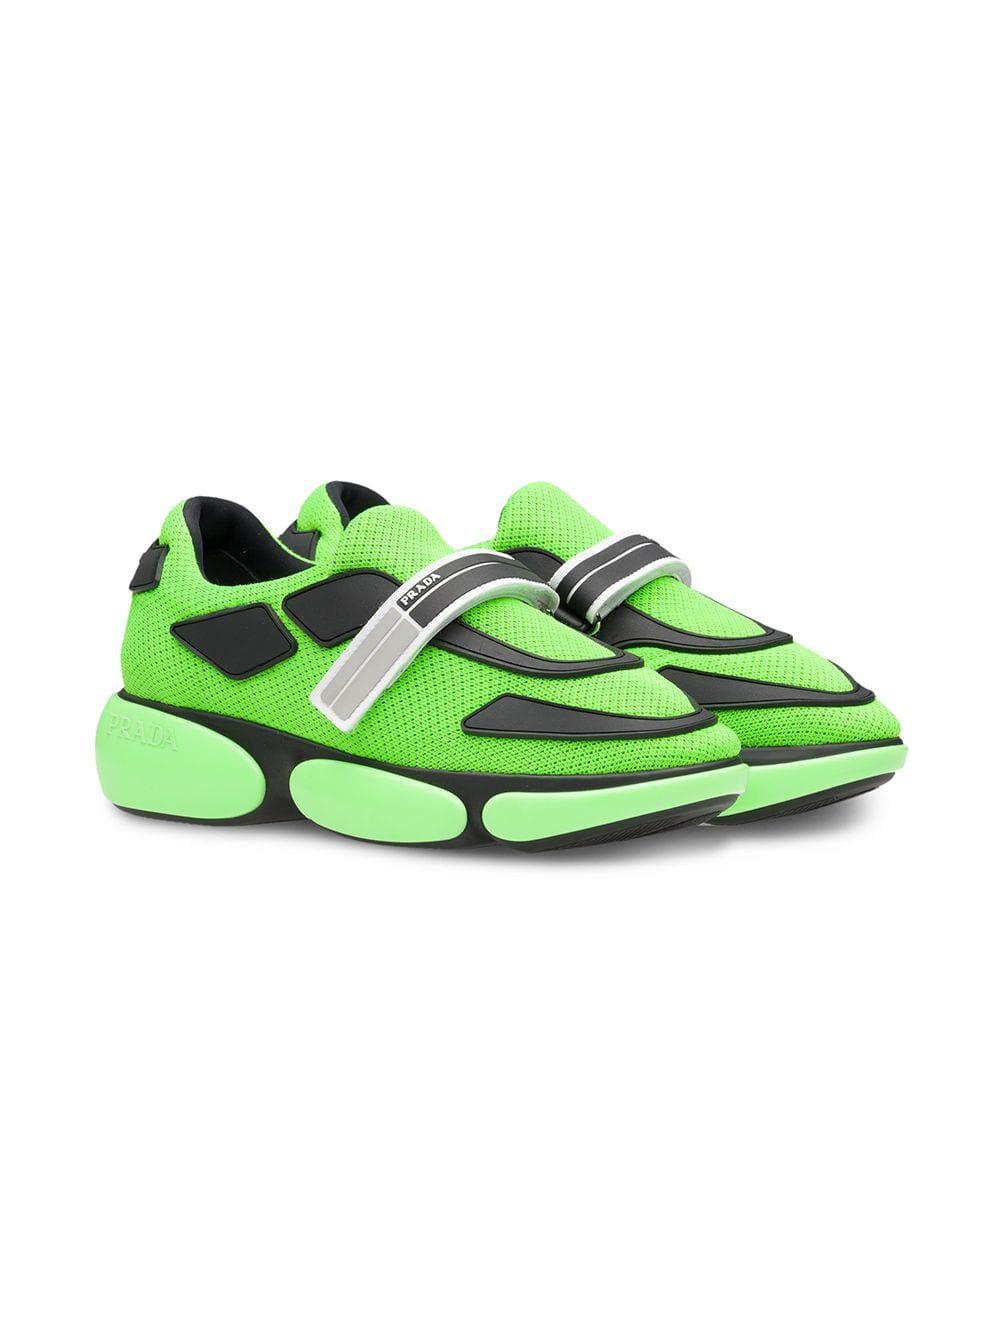 Prada Rubber Cloudbust Sneakers in Green - Lyst